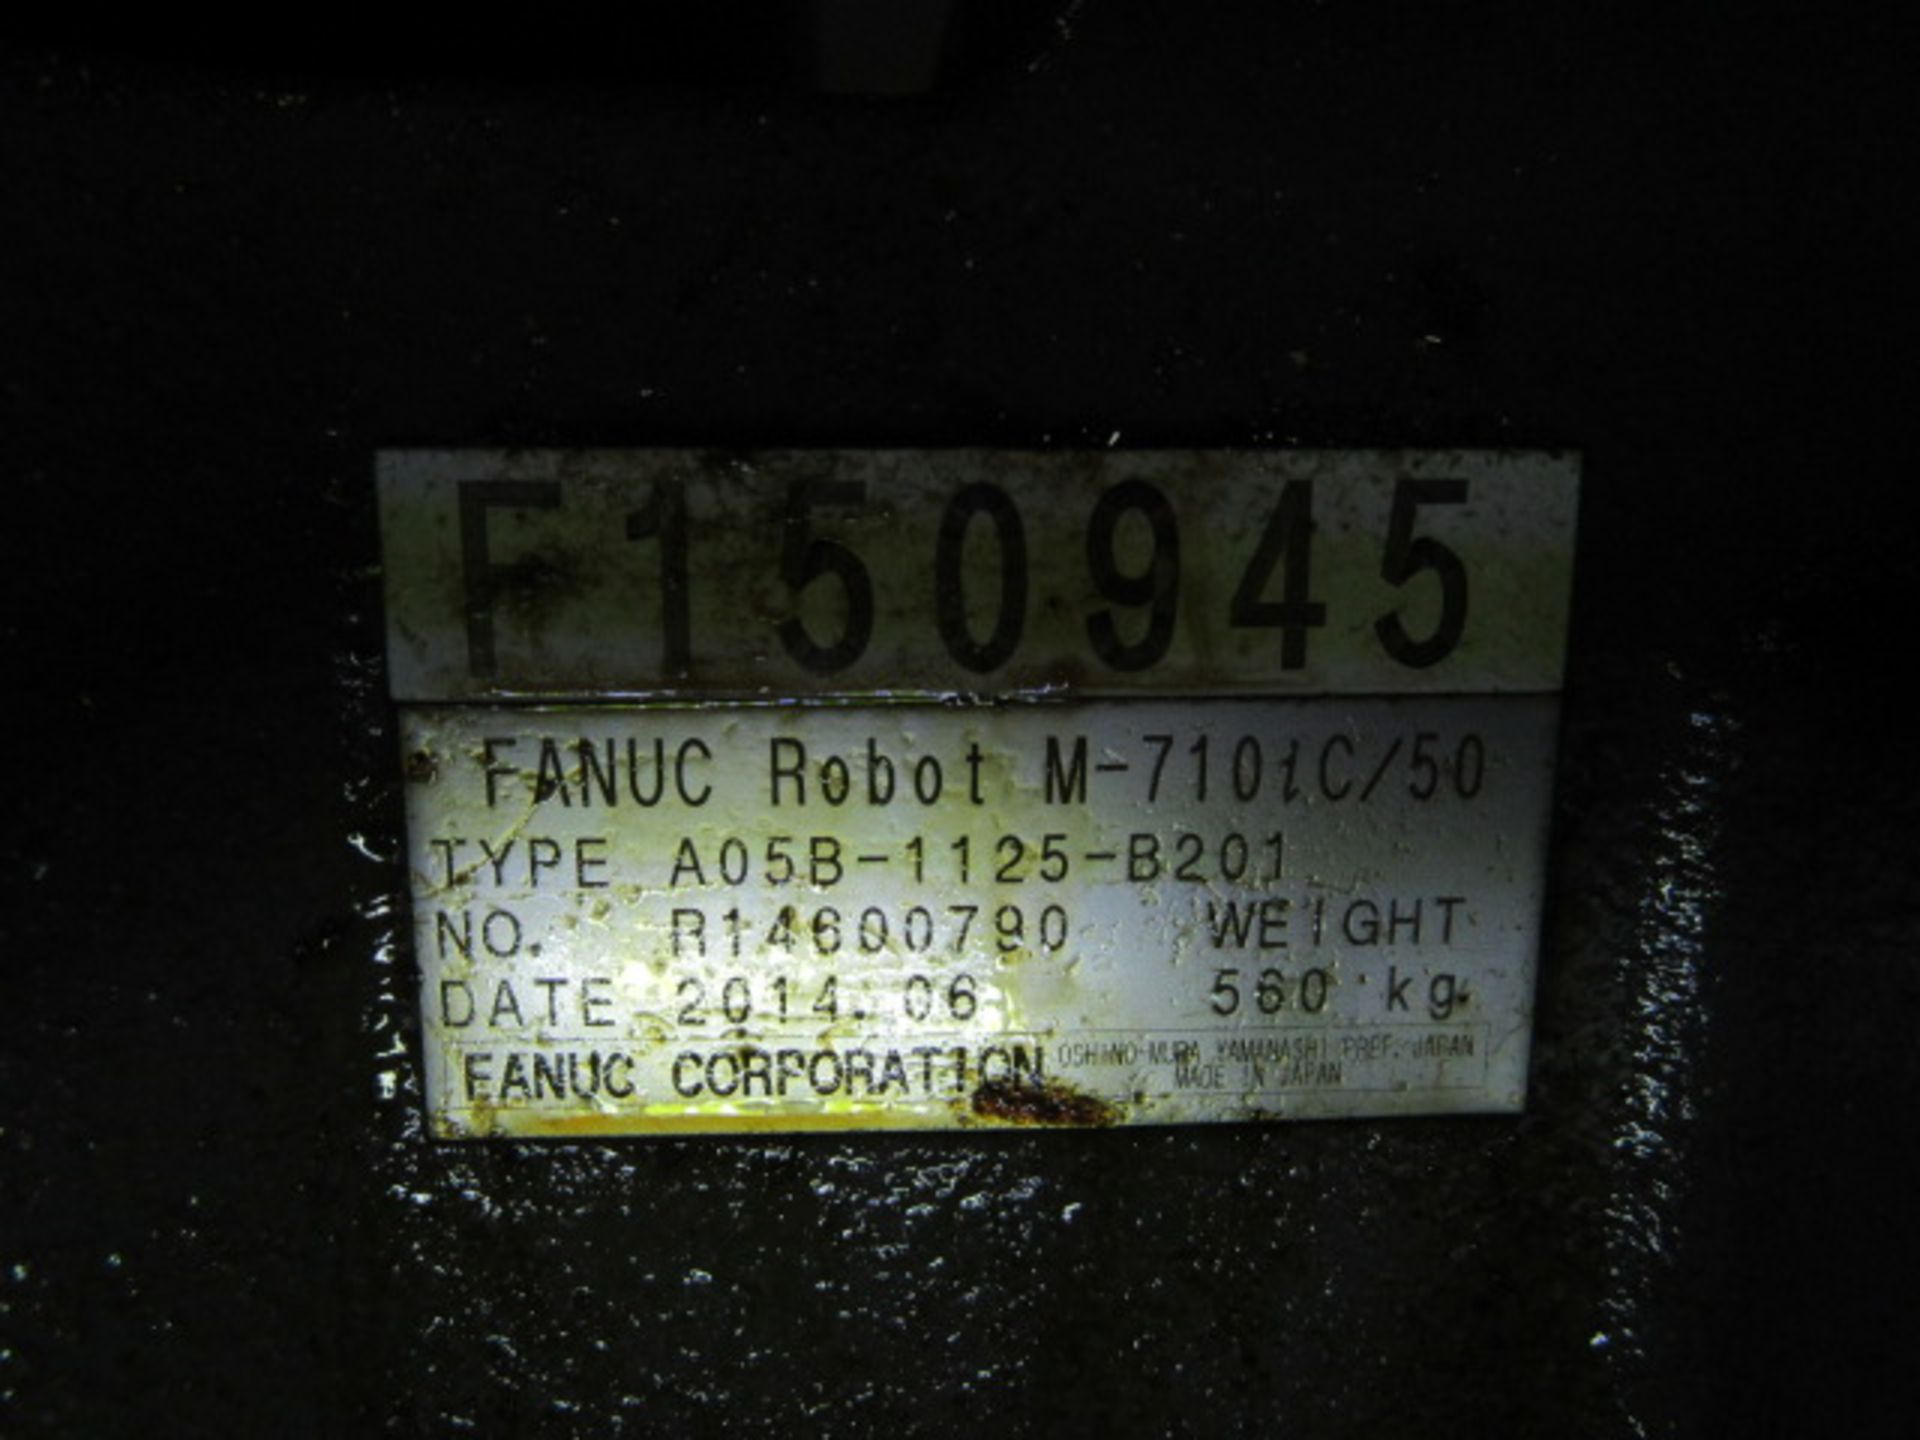 Fanuc M-710iC50 Manipulating Robot - Image 5 of 6